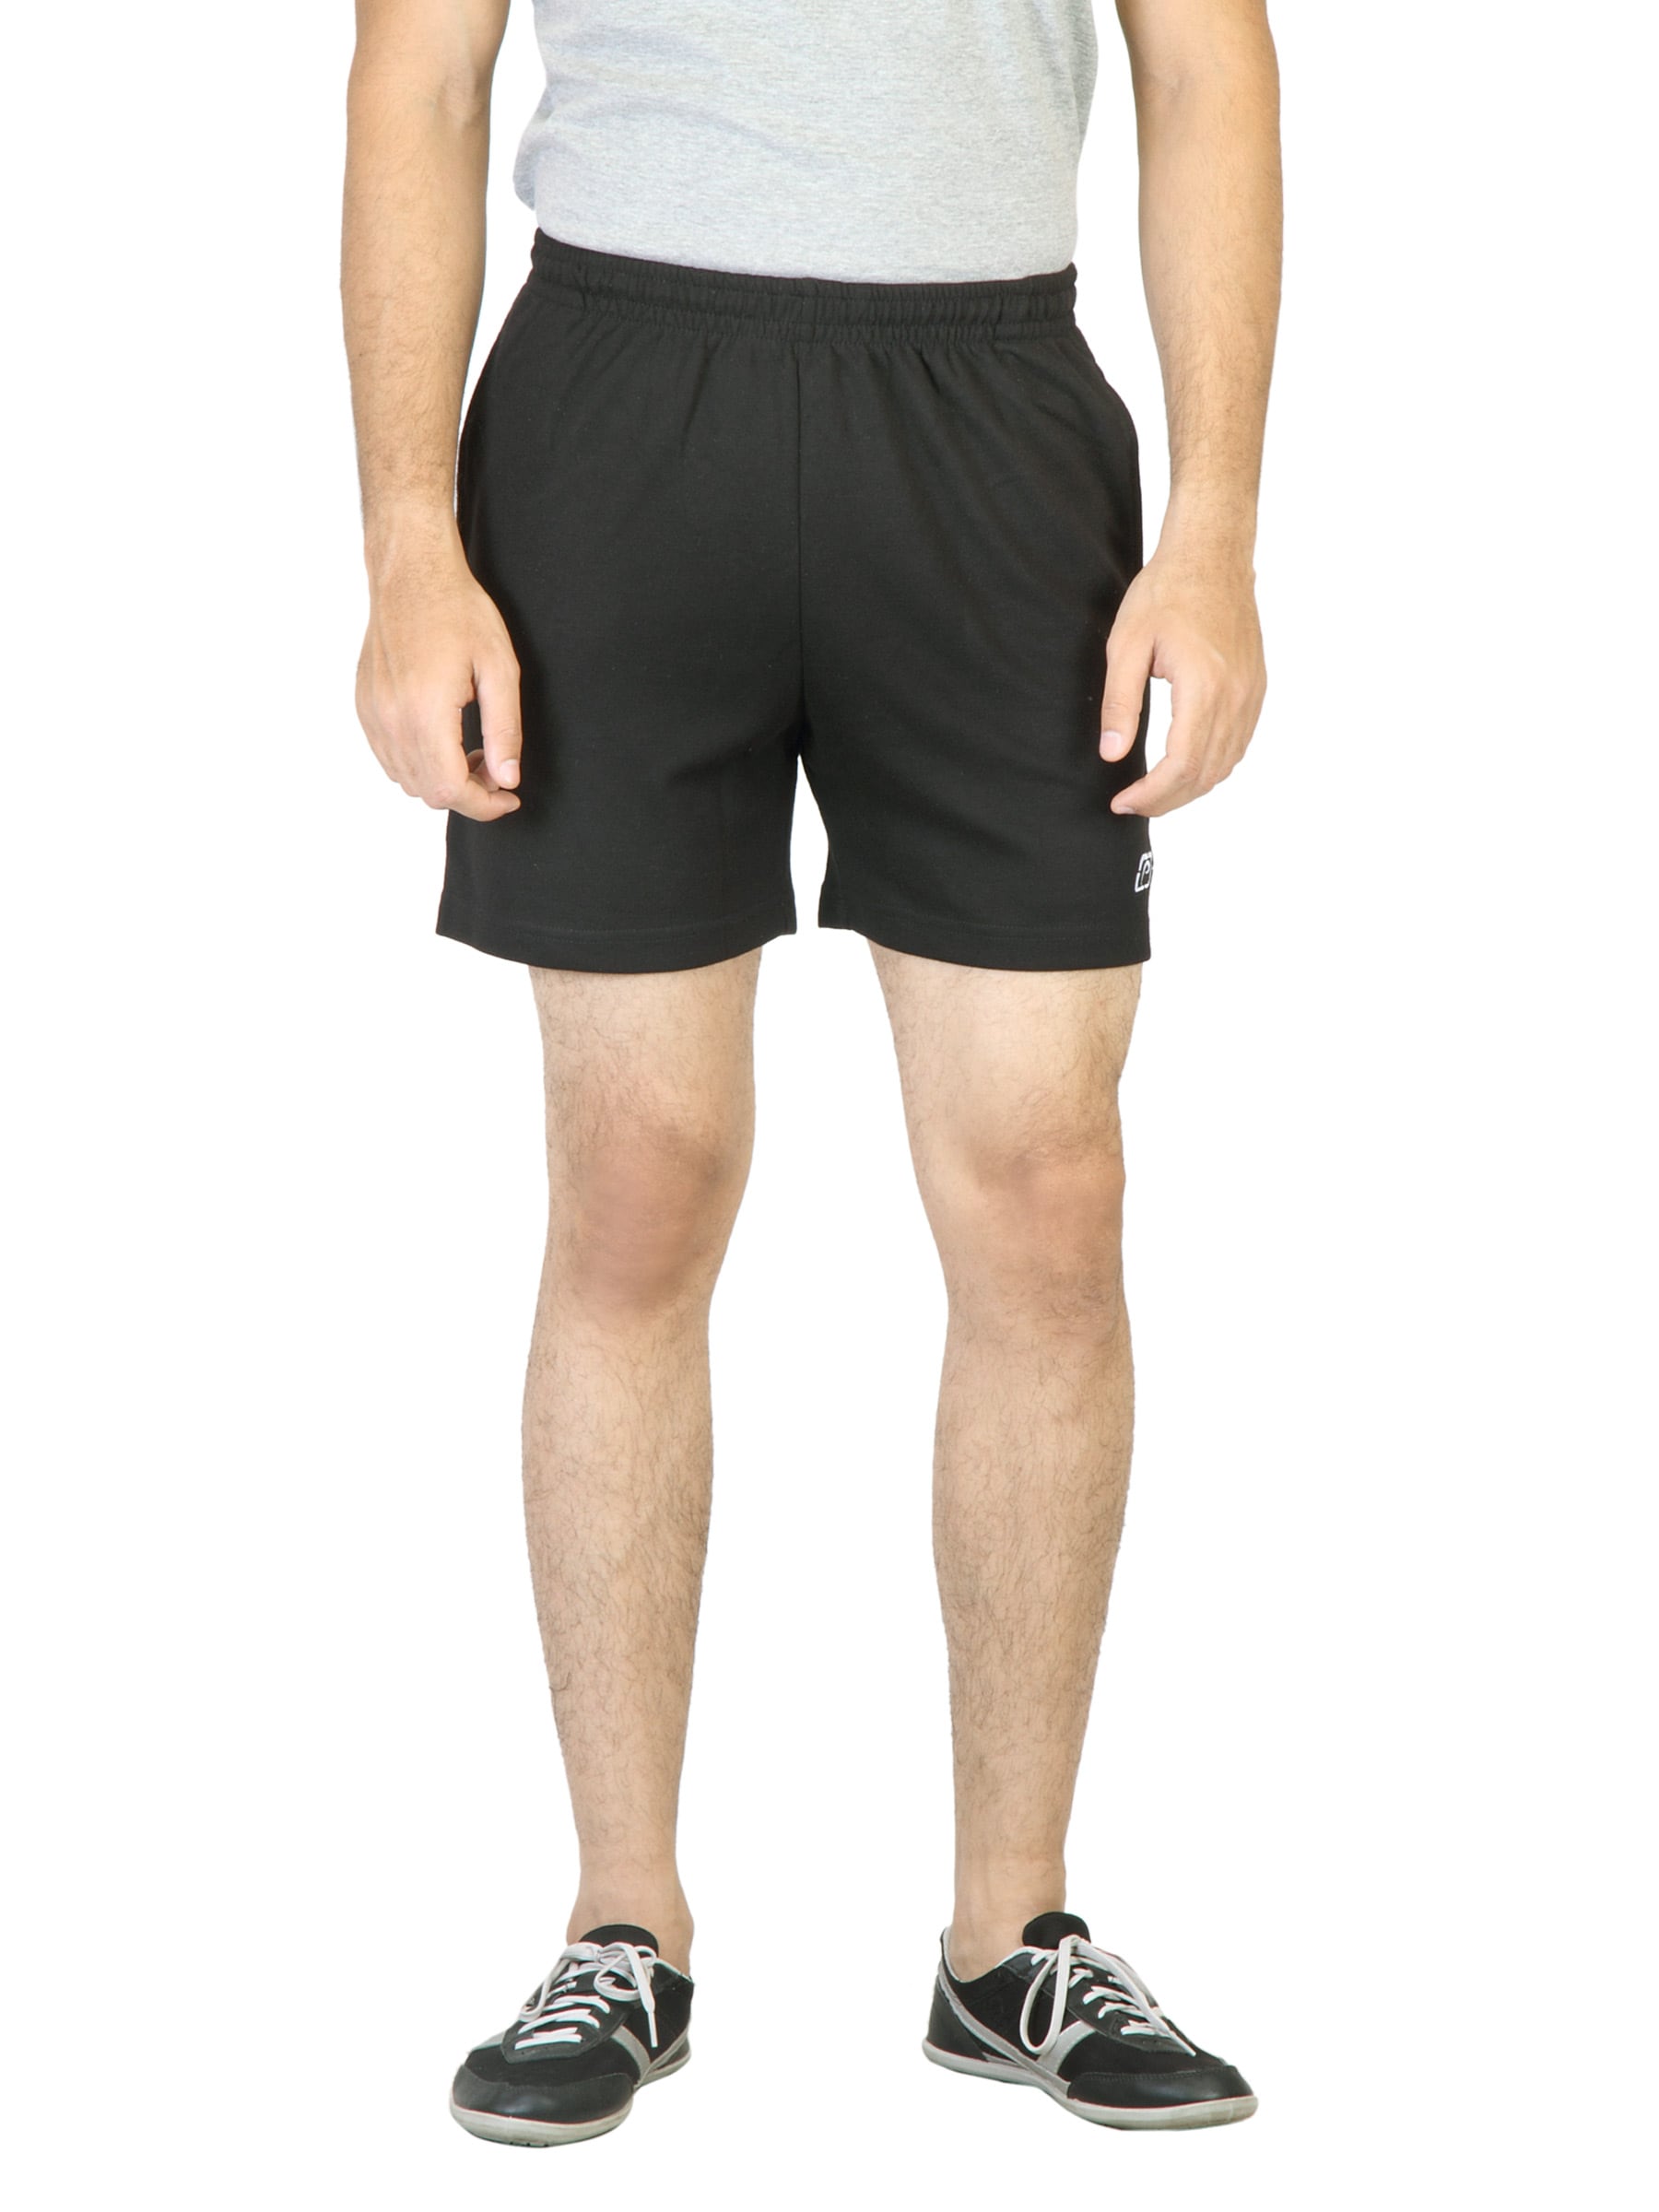 Proline Black Sports Shorts